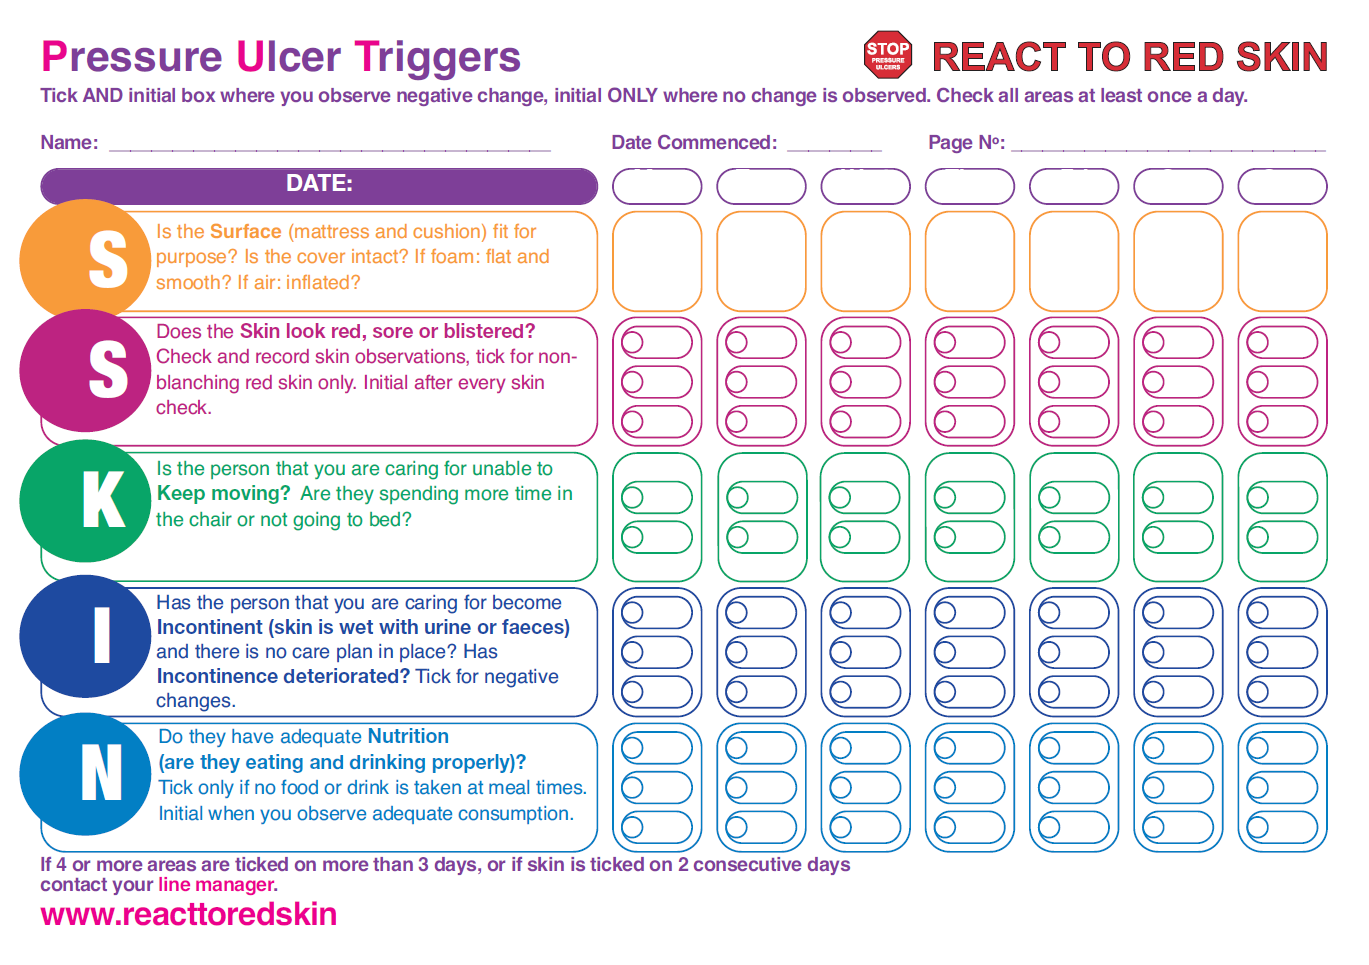 Pressure ulcer triggers